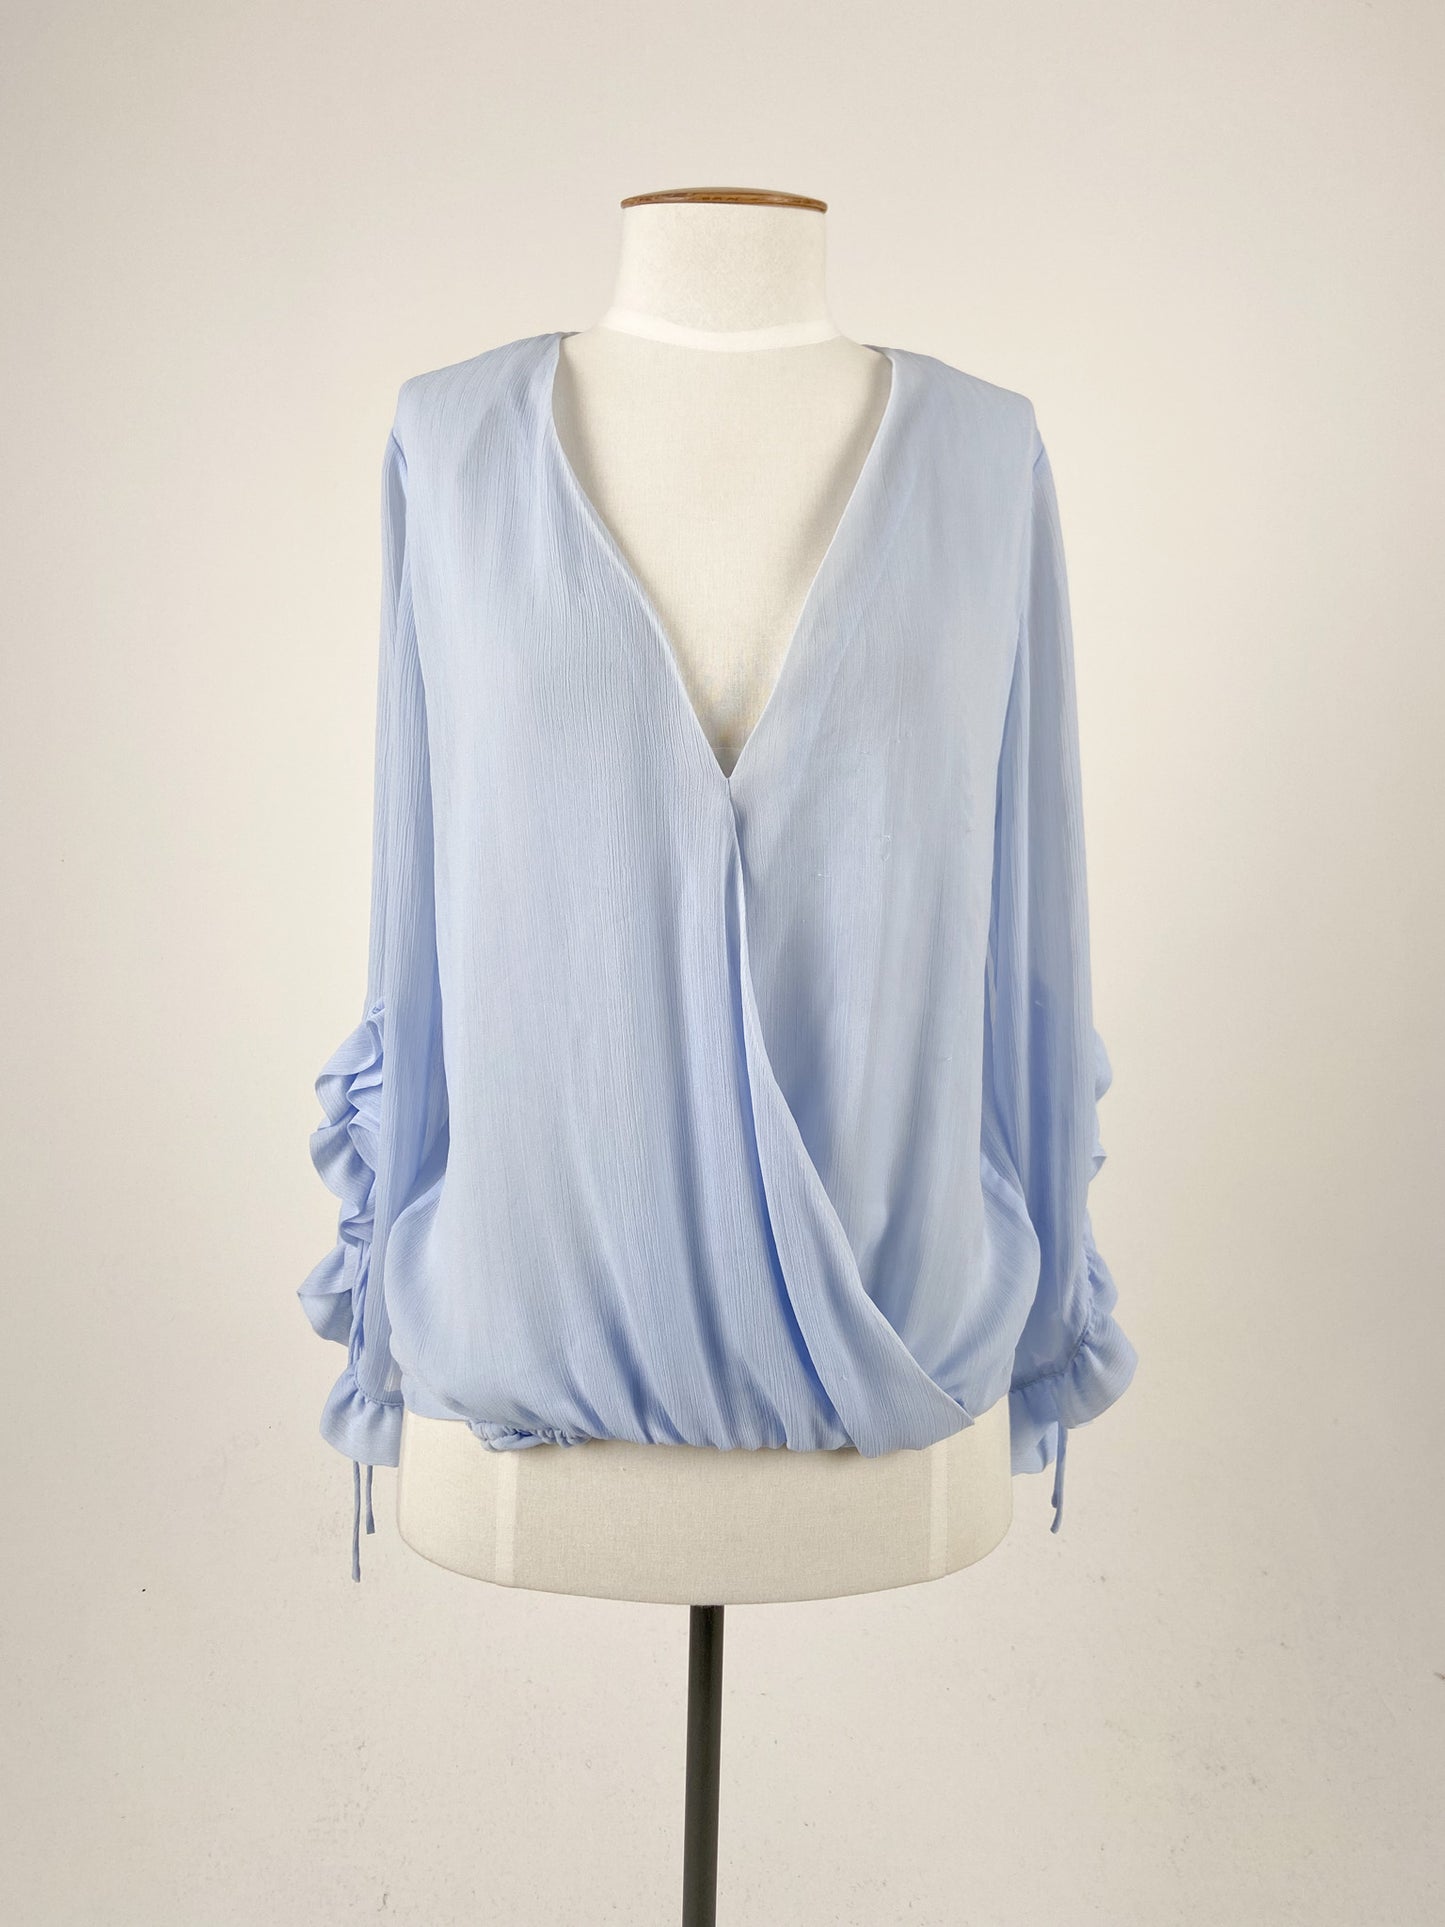 Zara | Blue Casual/Workwear Top | Size XS